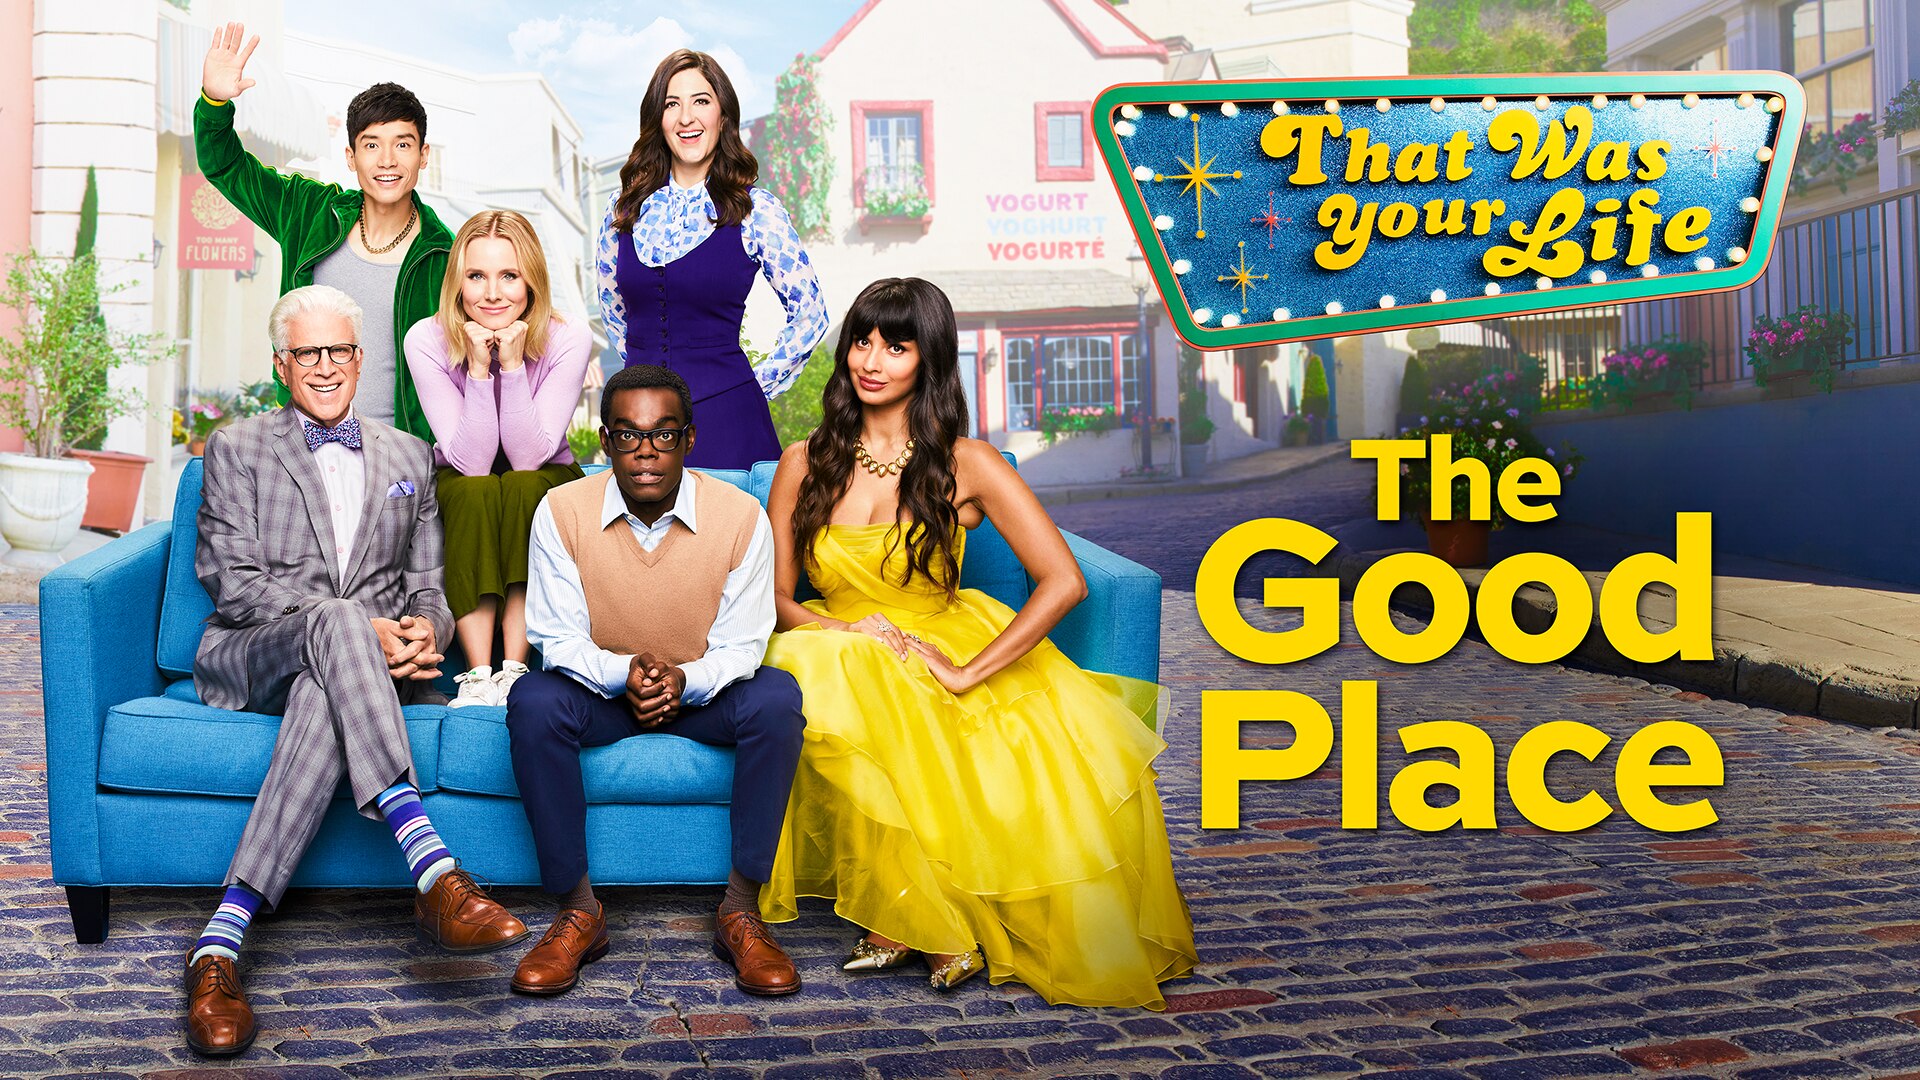 The Good Place Season 4 Episodes at NBC.com